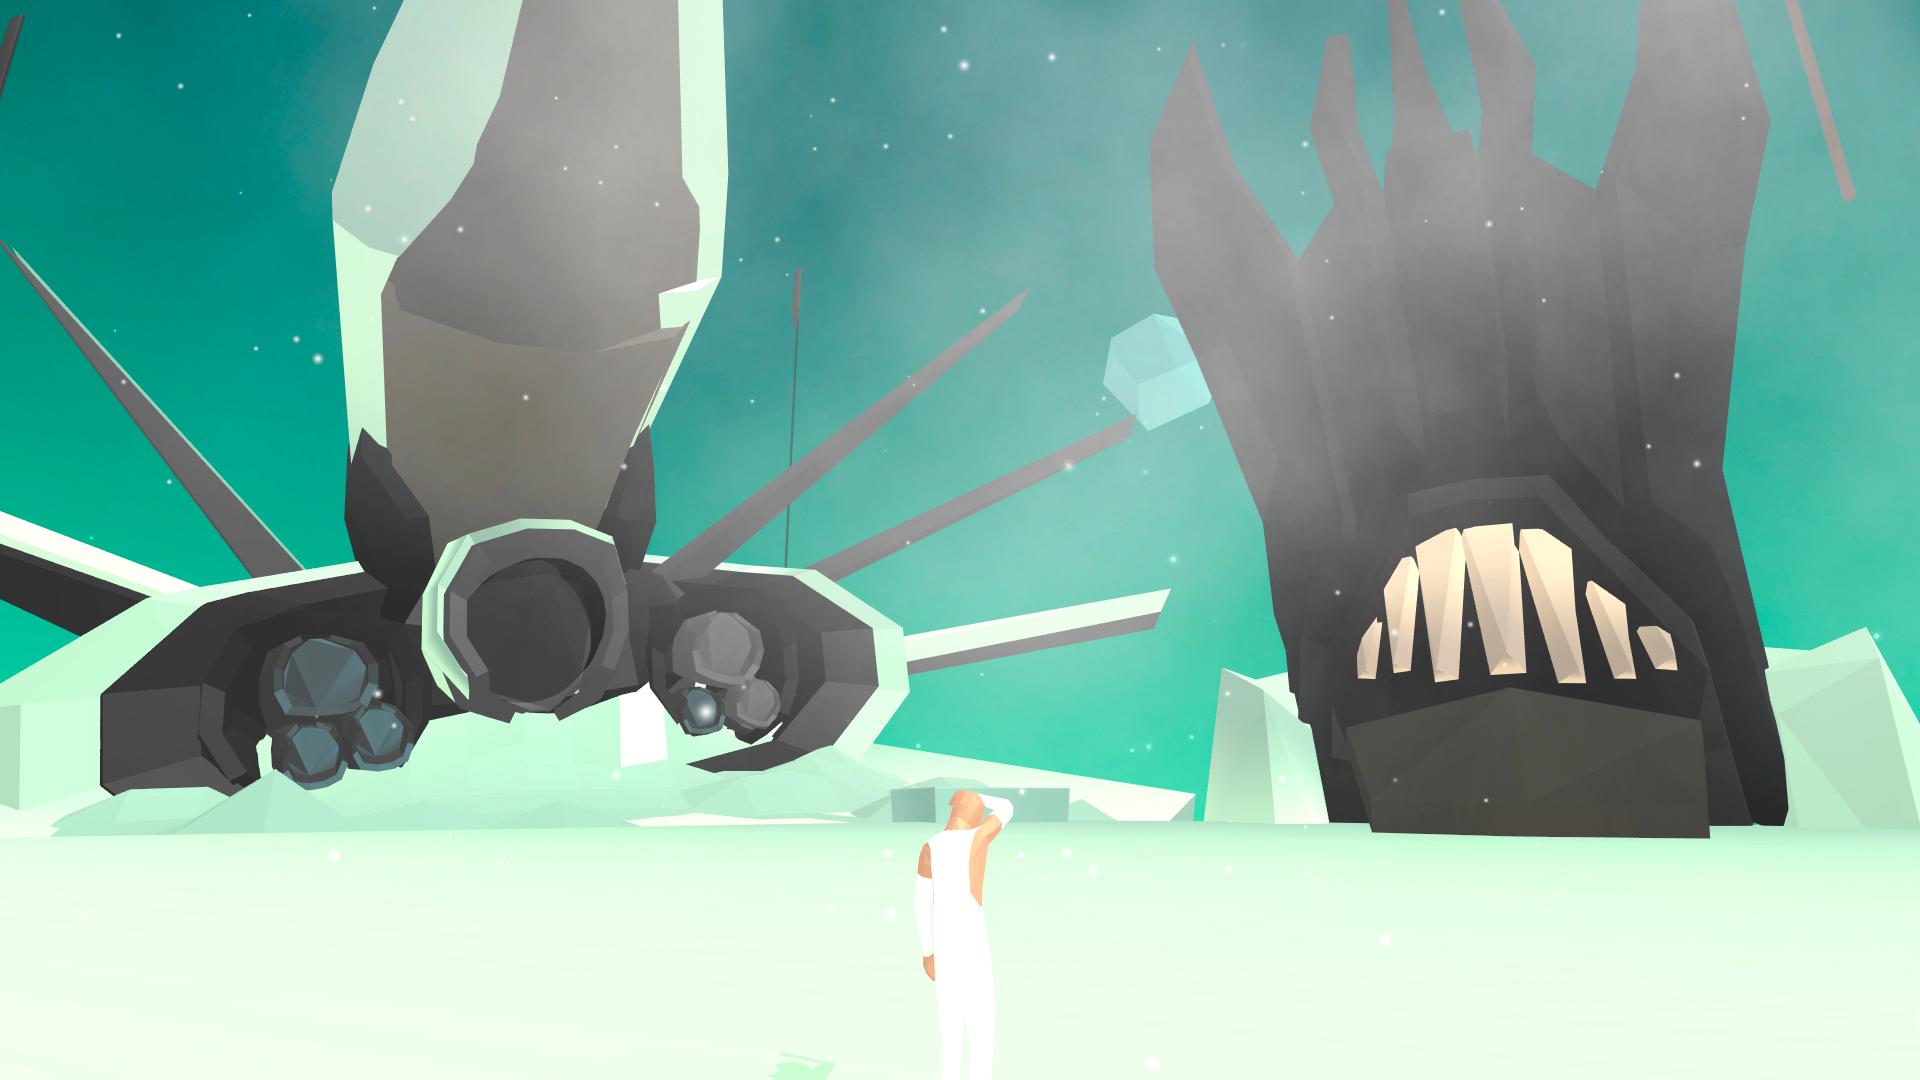 Screenshot №14 from game Laraan